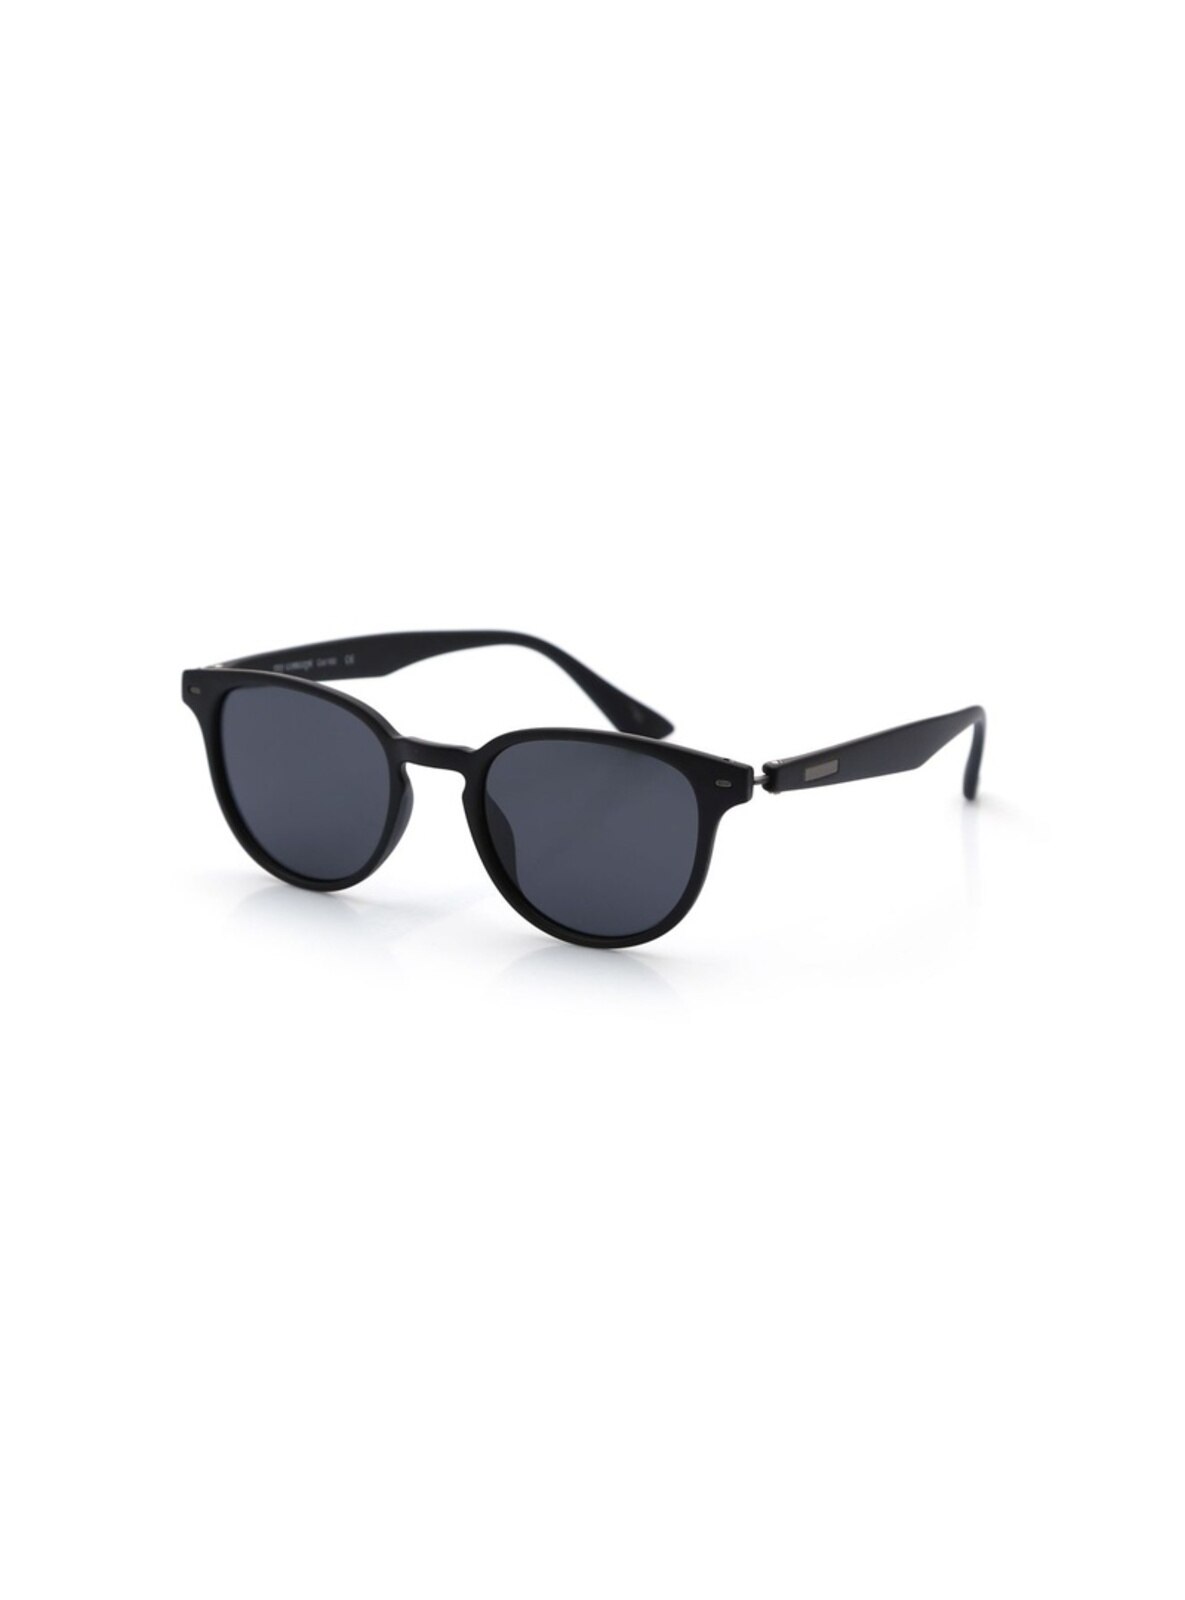 Neutral - 250gr - Sunglasses